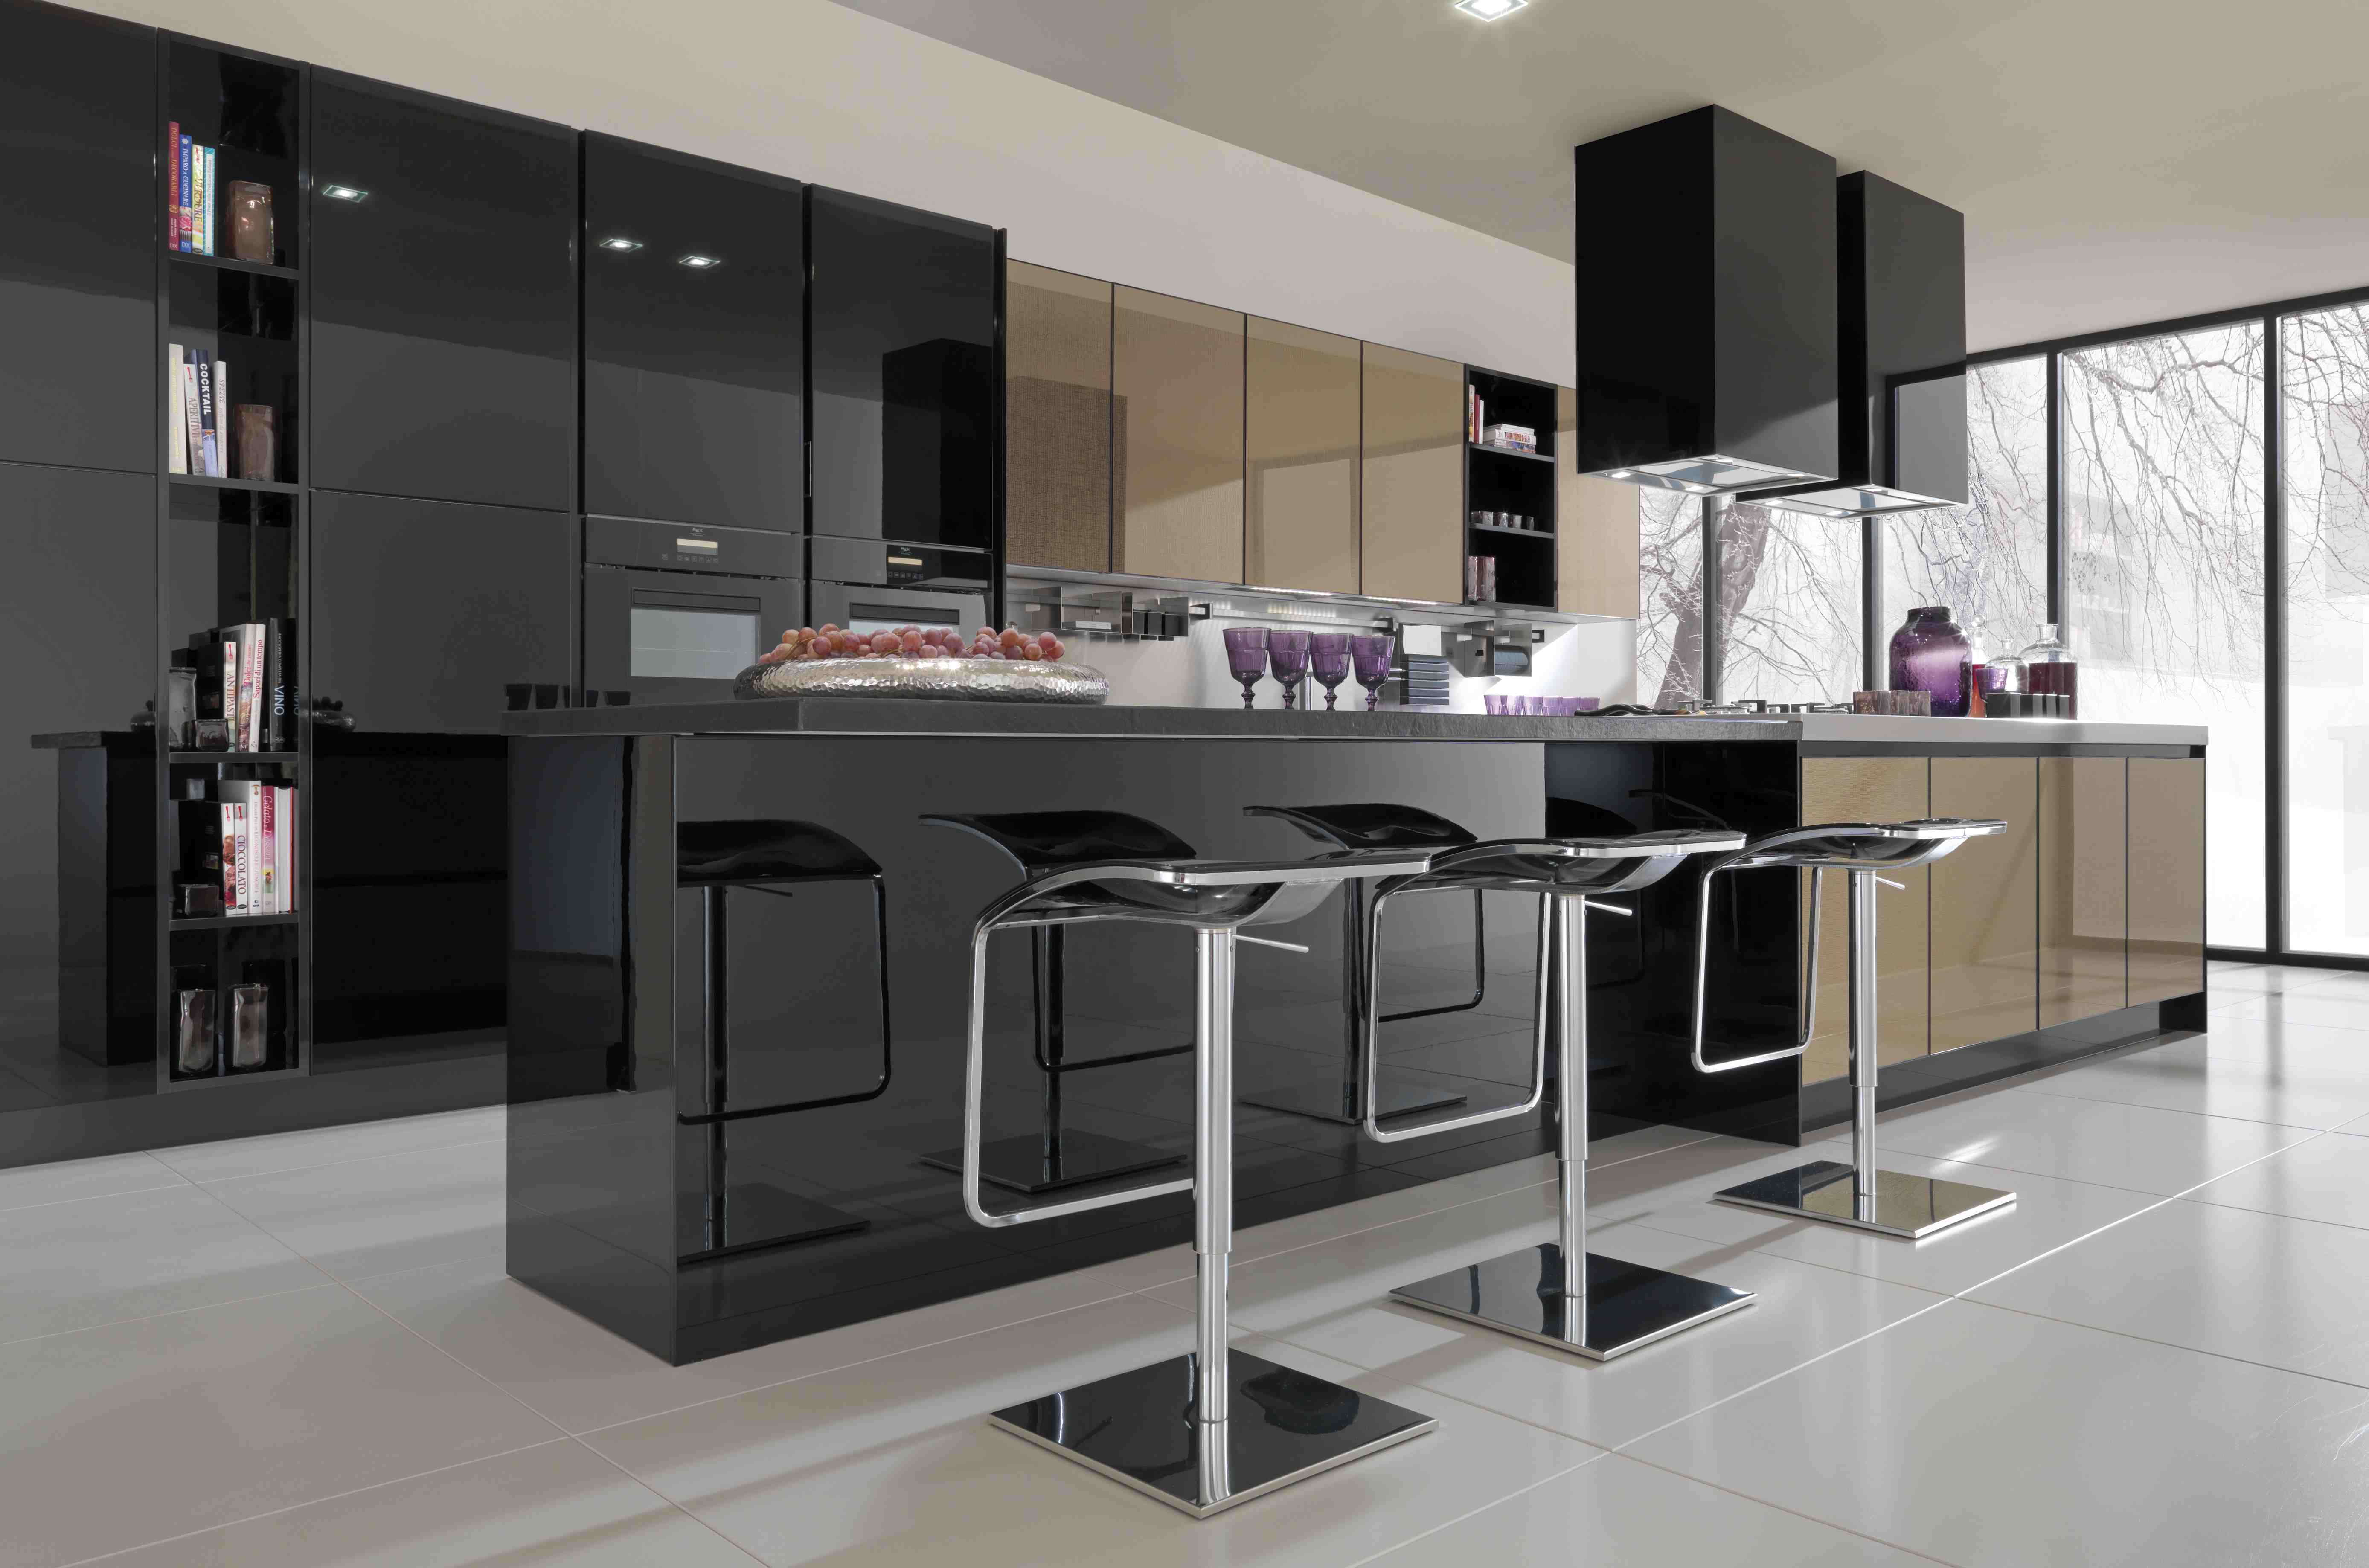 kitchen italian kitchens designs contemporary classy berloni modern thinks everyone outside box who 2021 cozinha source architectureartdesigns